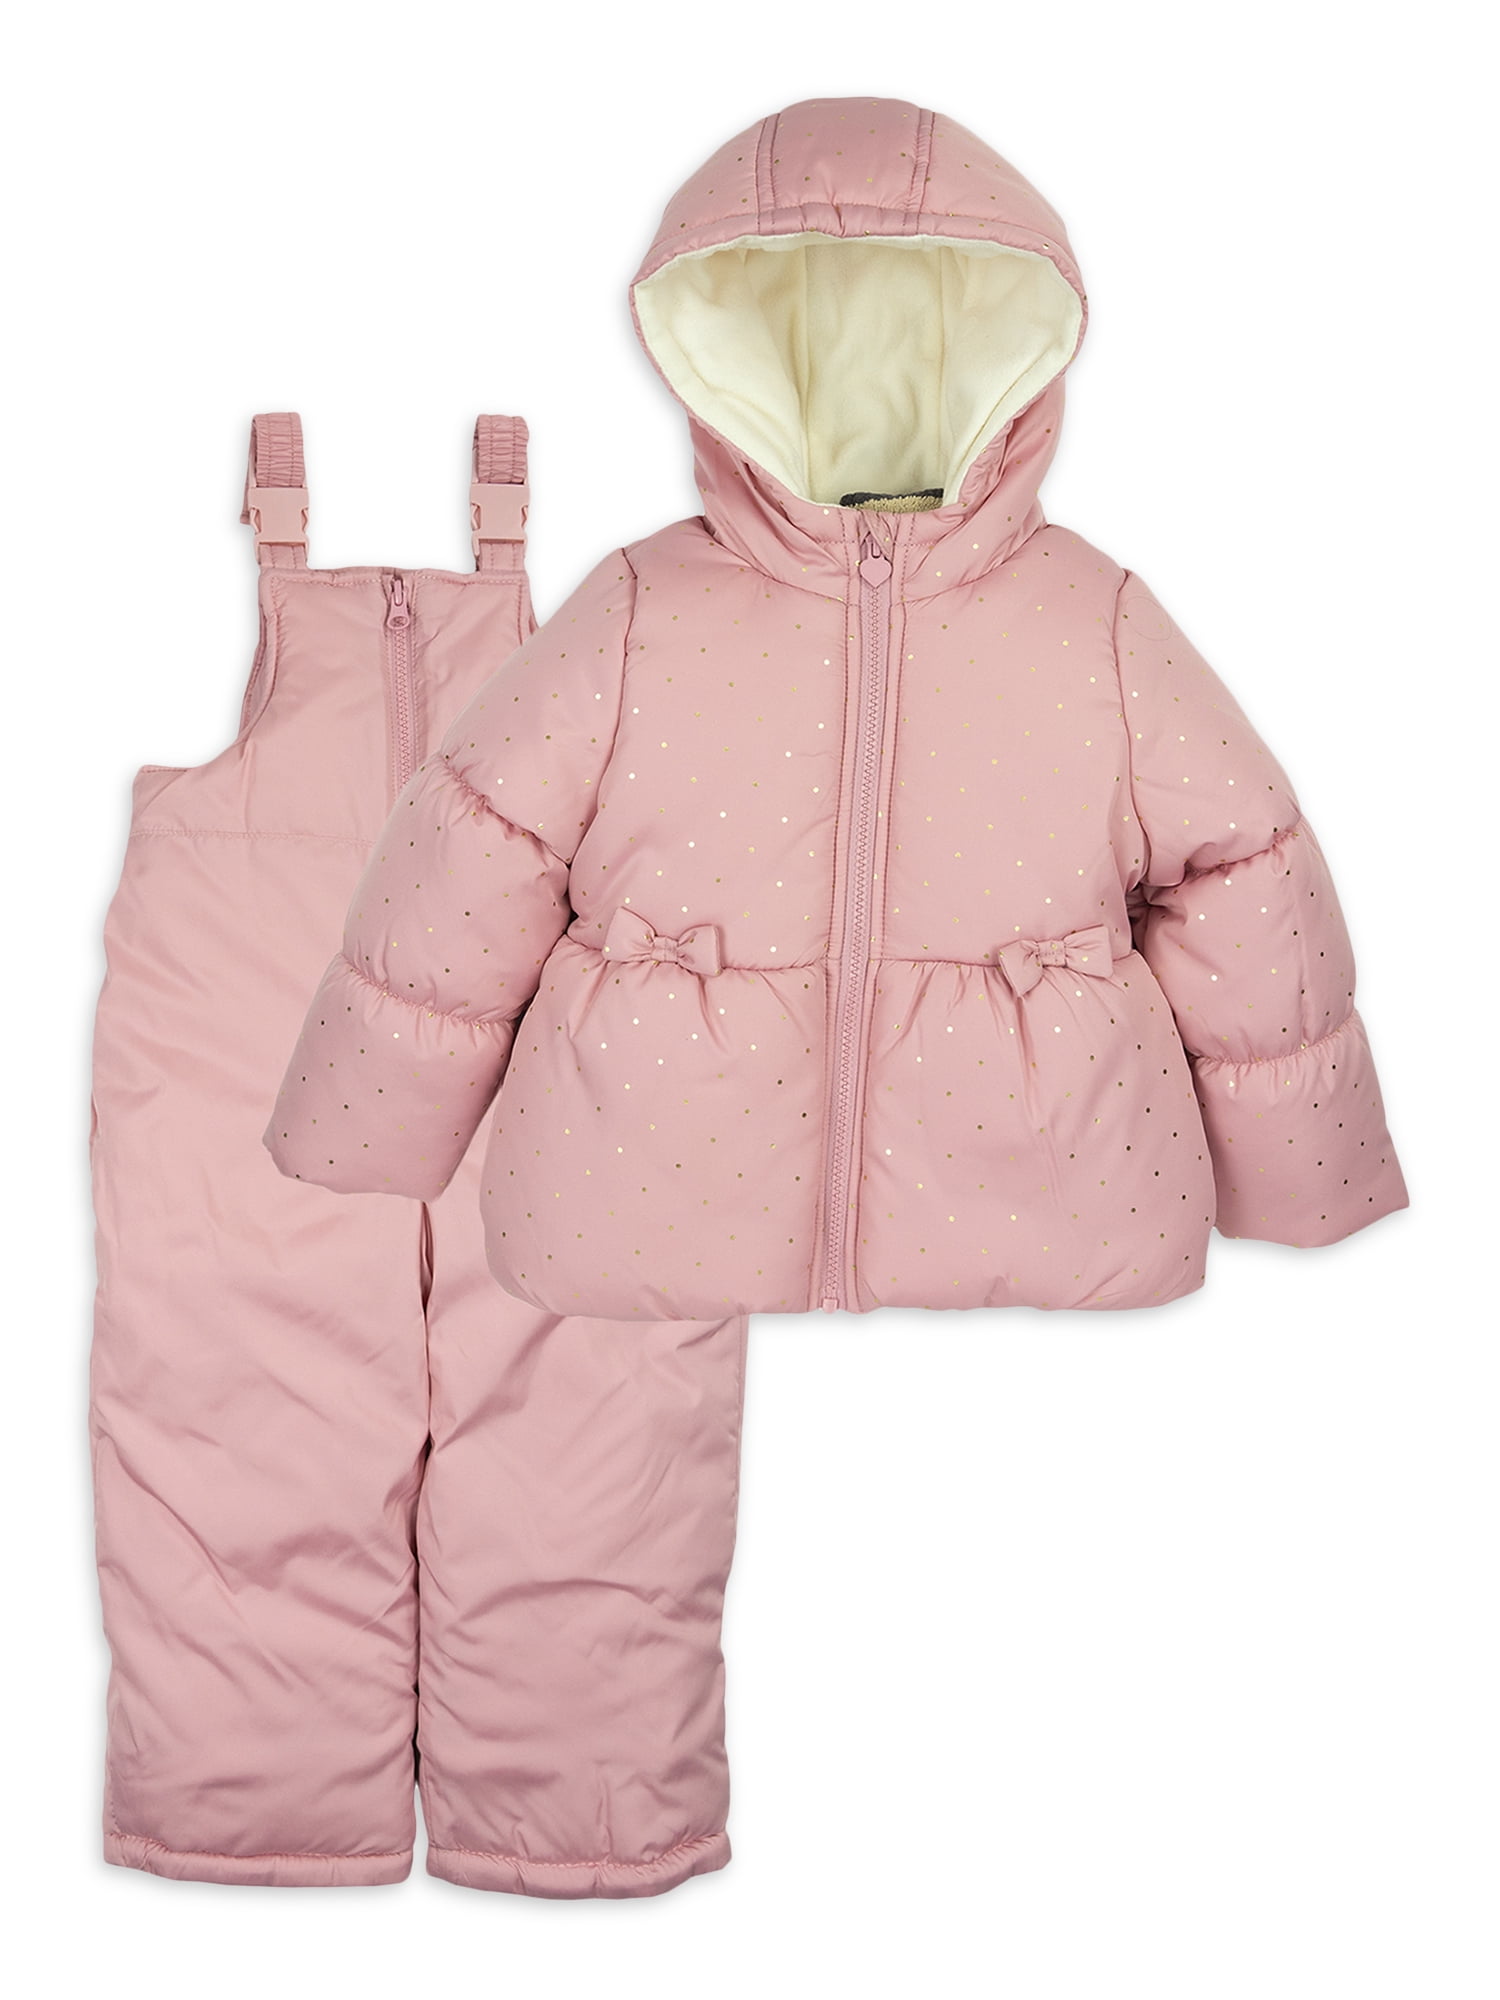 18M Floral Print Puffer Jacket NWT $70 ZEROXPOSUR® Baby Girls' 12M 